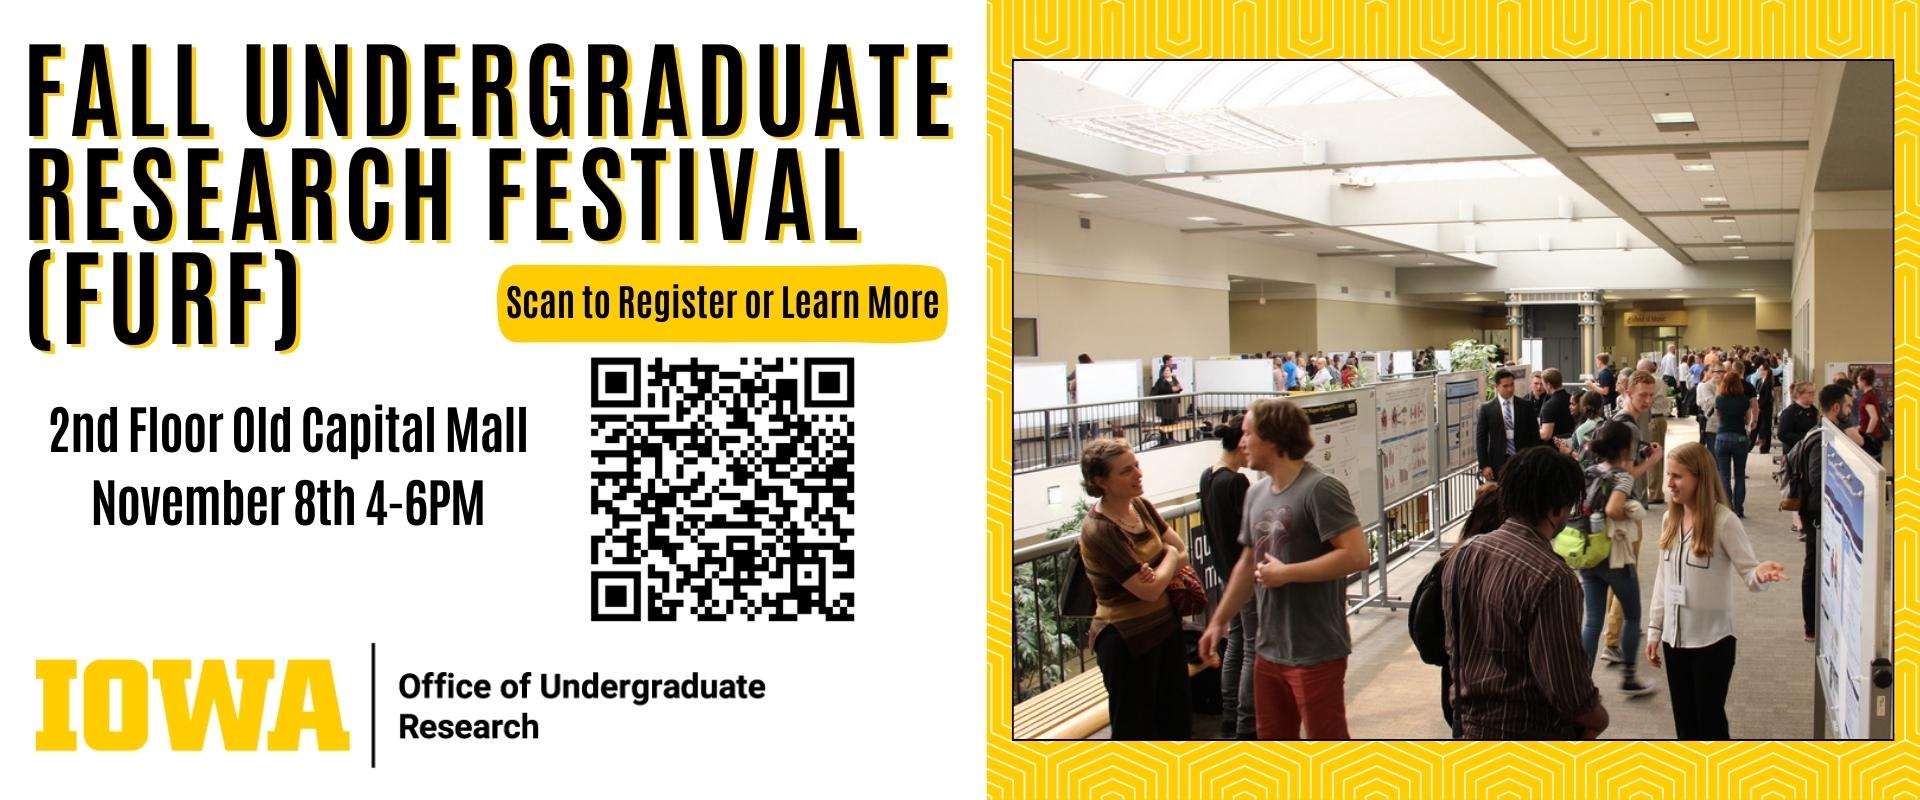 Fall Undergraduate Research Festival 